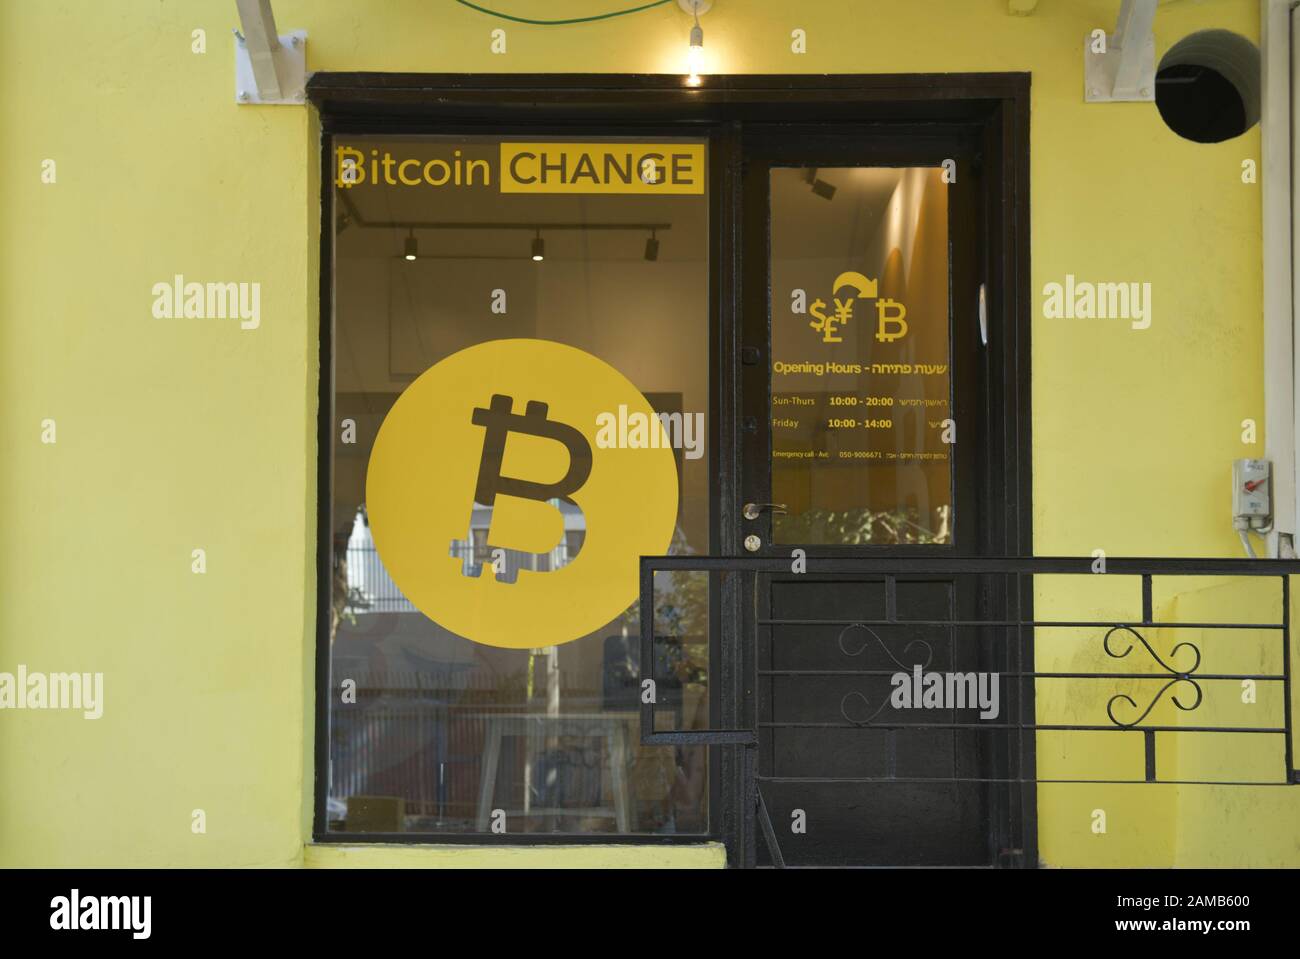 Bitcoin Change, Tel Aviv, Israel Stock Photo - Alamy